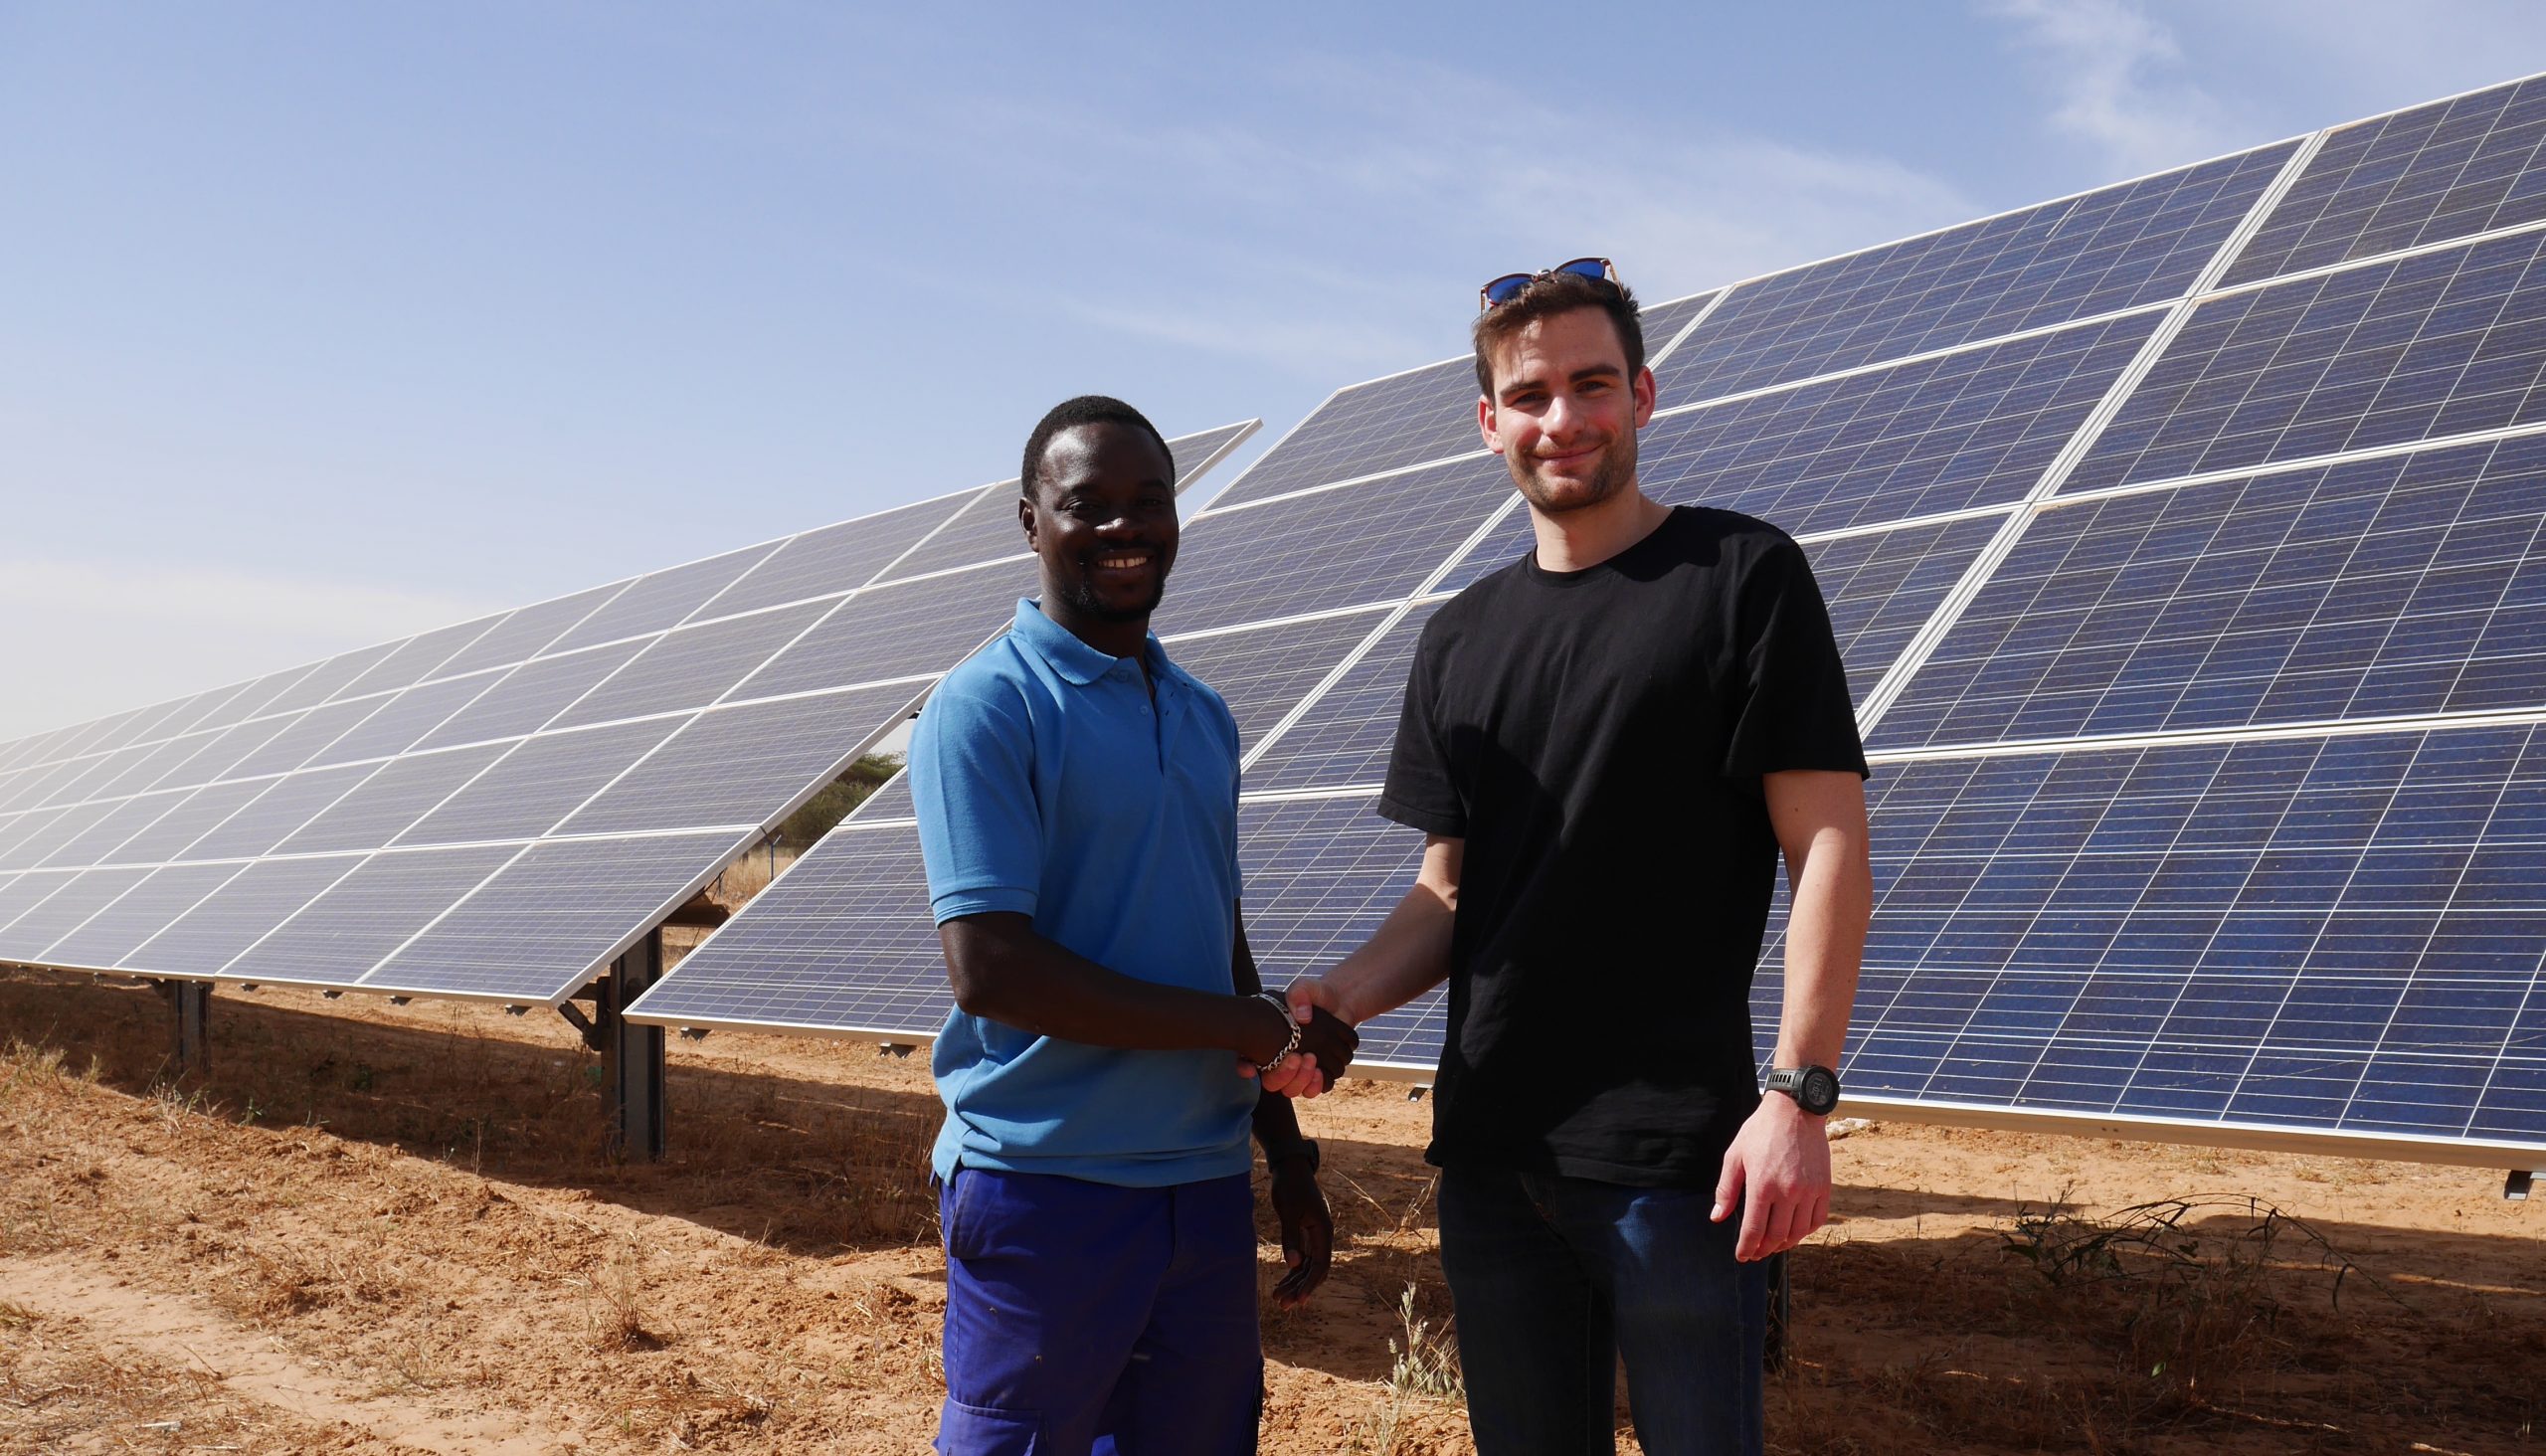 A project site visit to Senegal